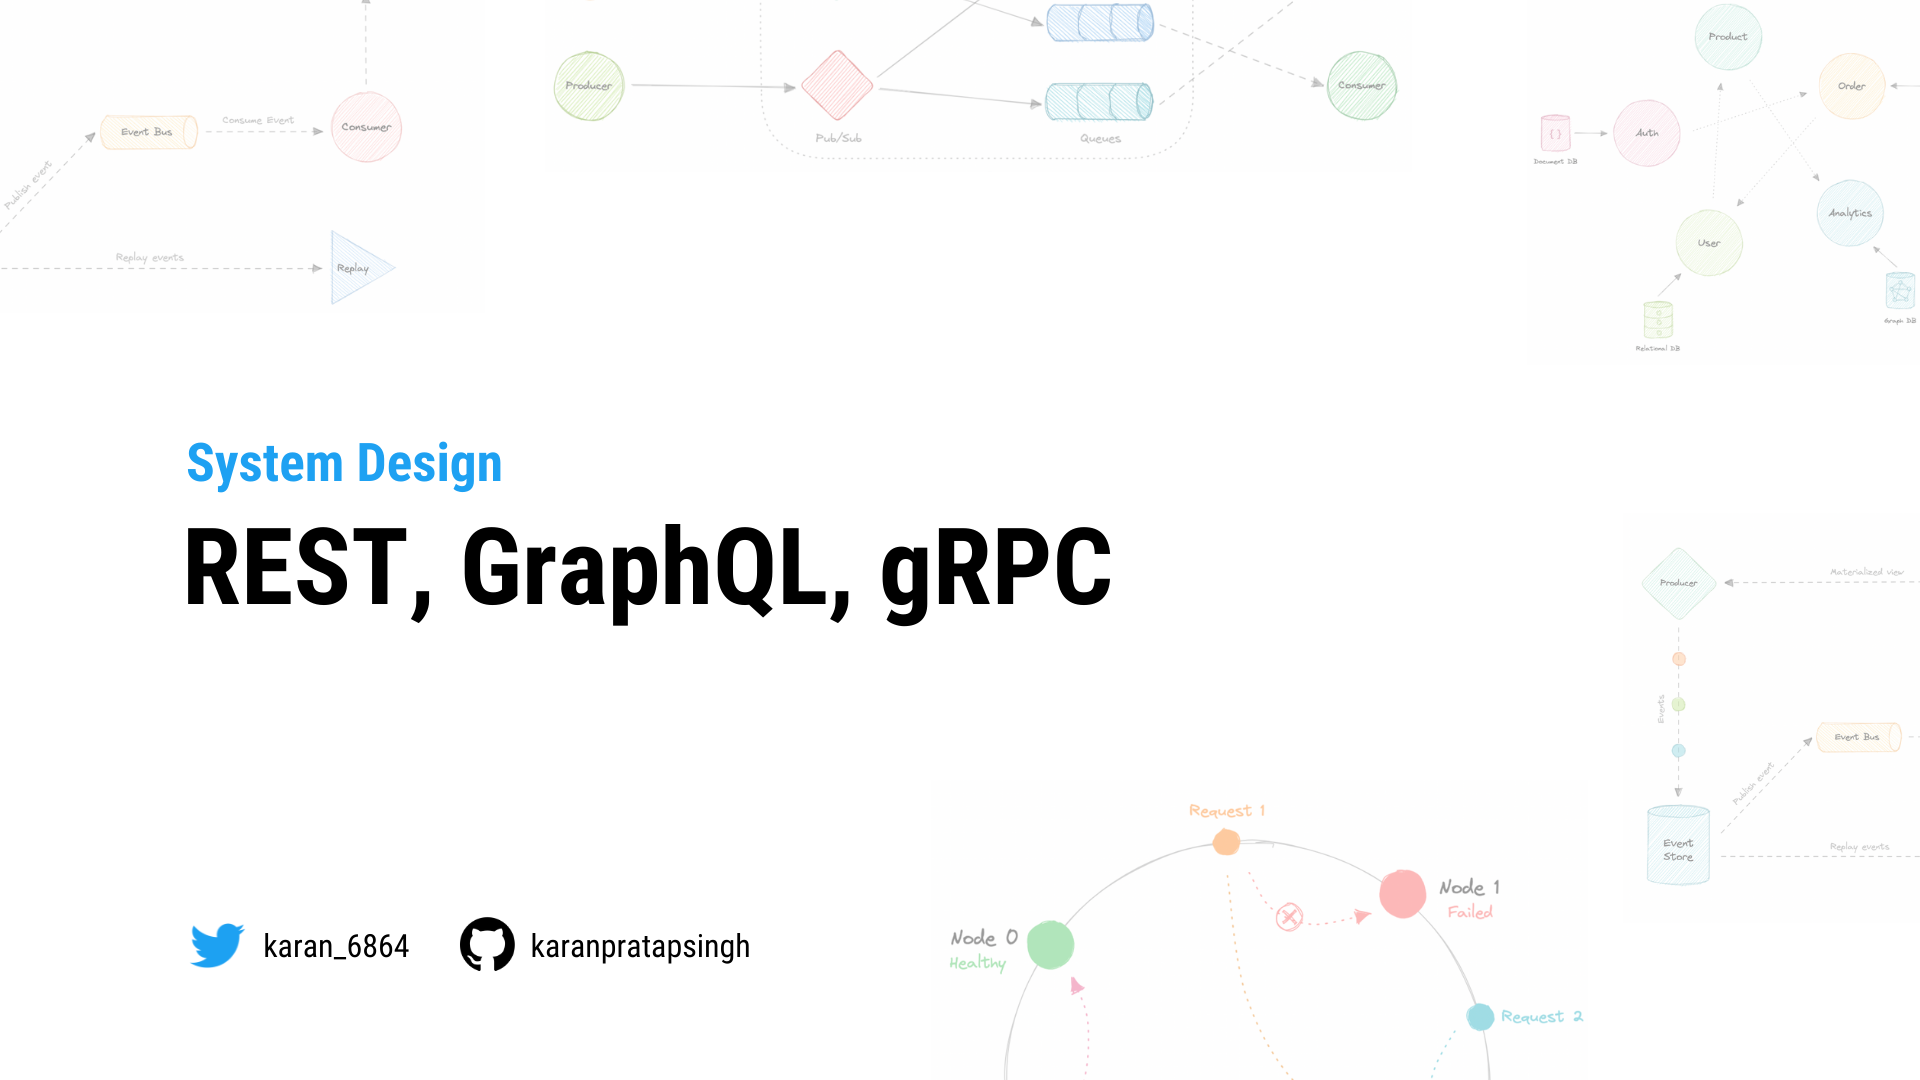 graphql vs rest vs grpc